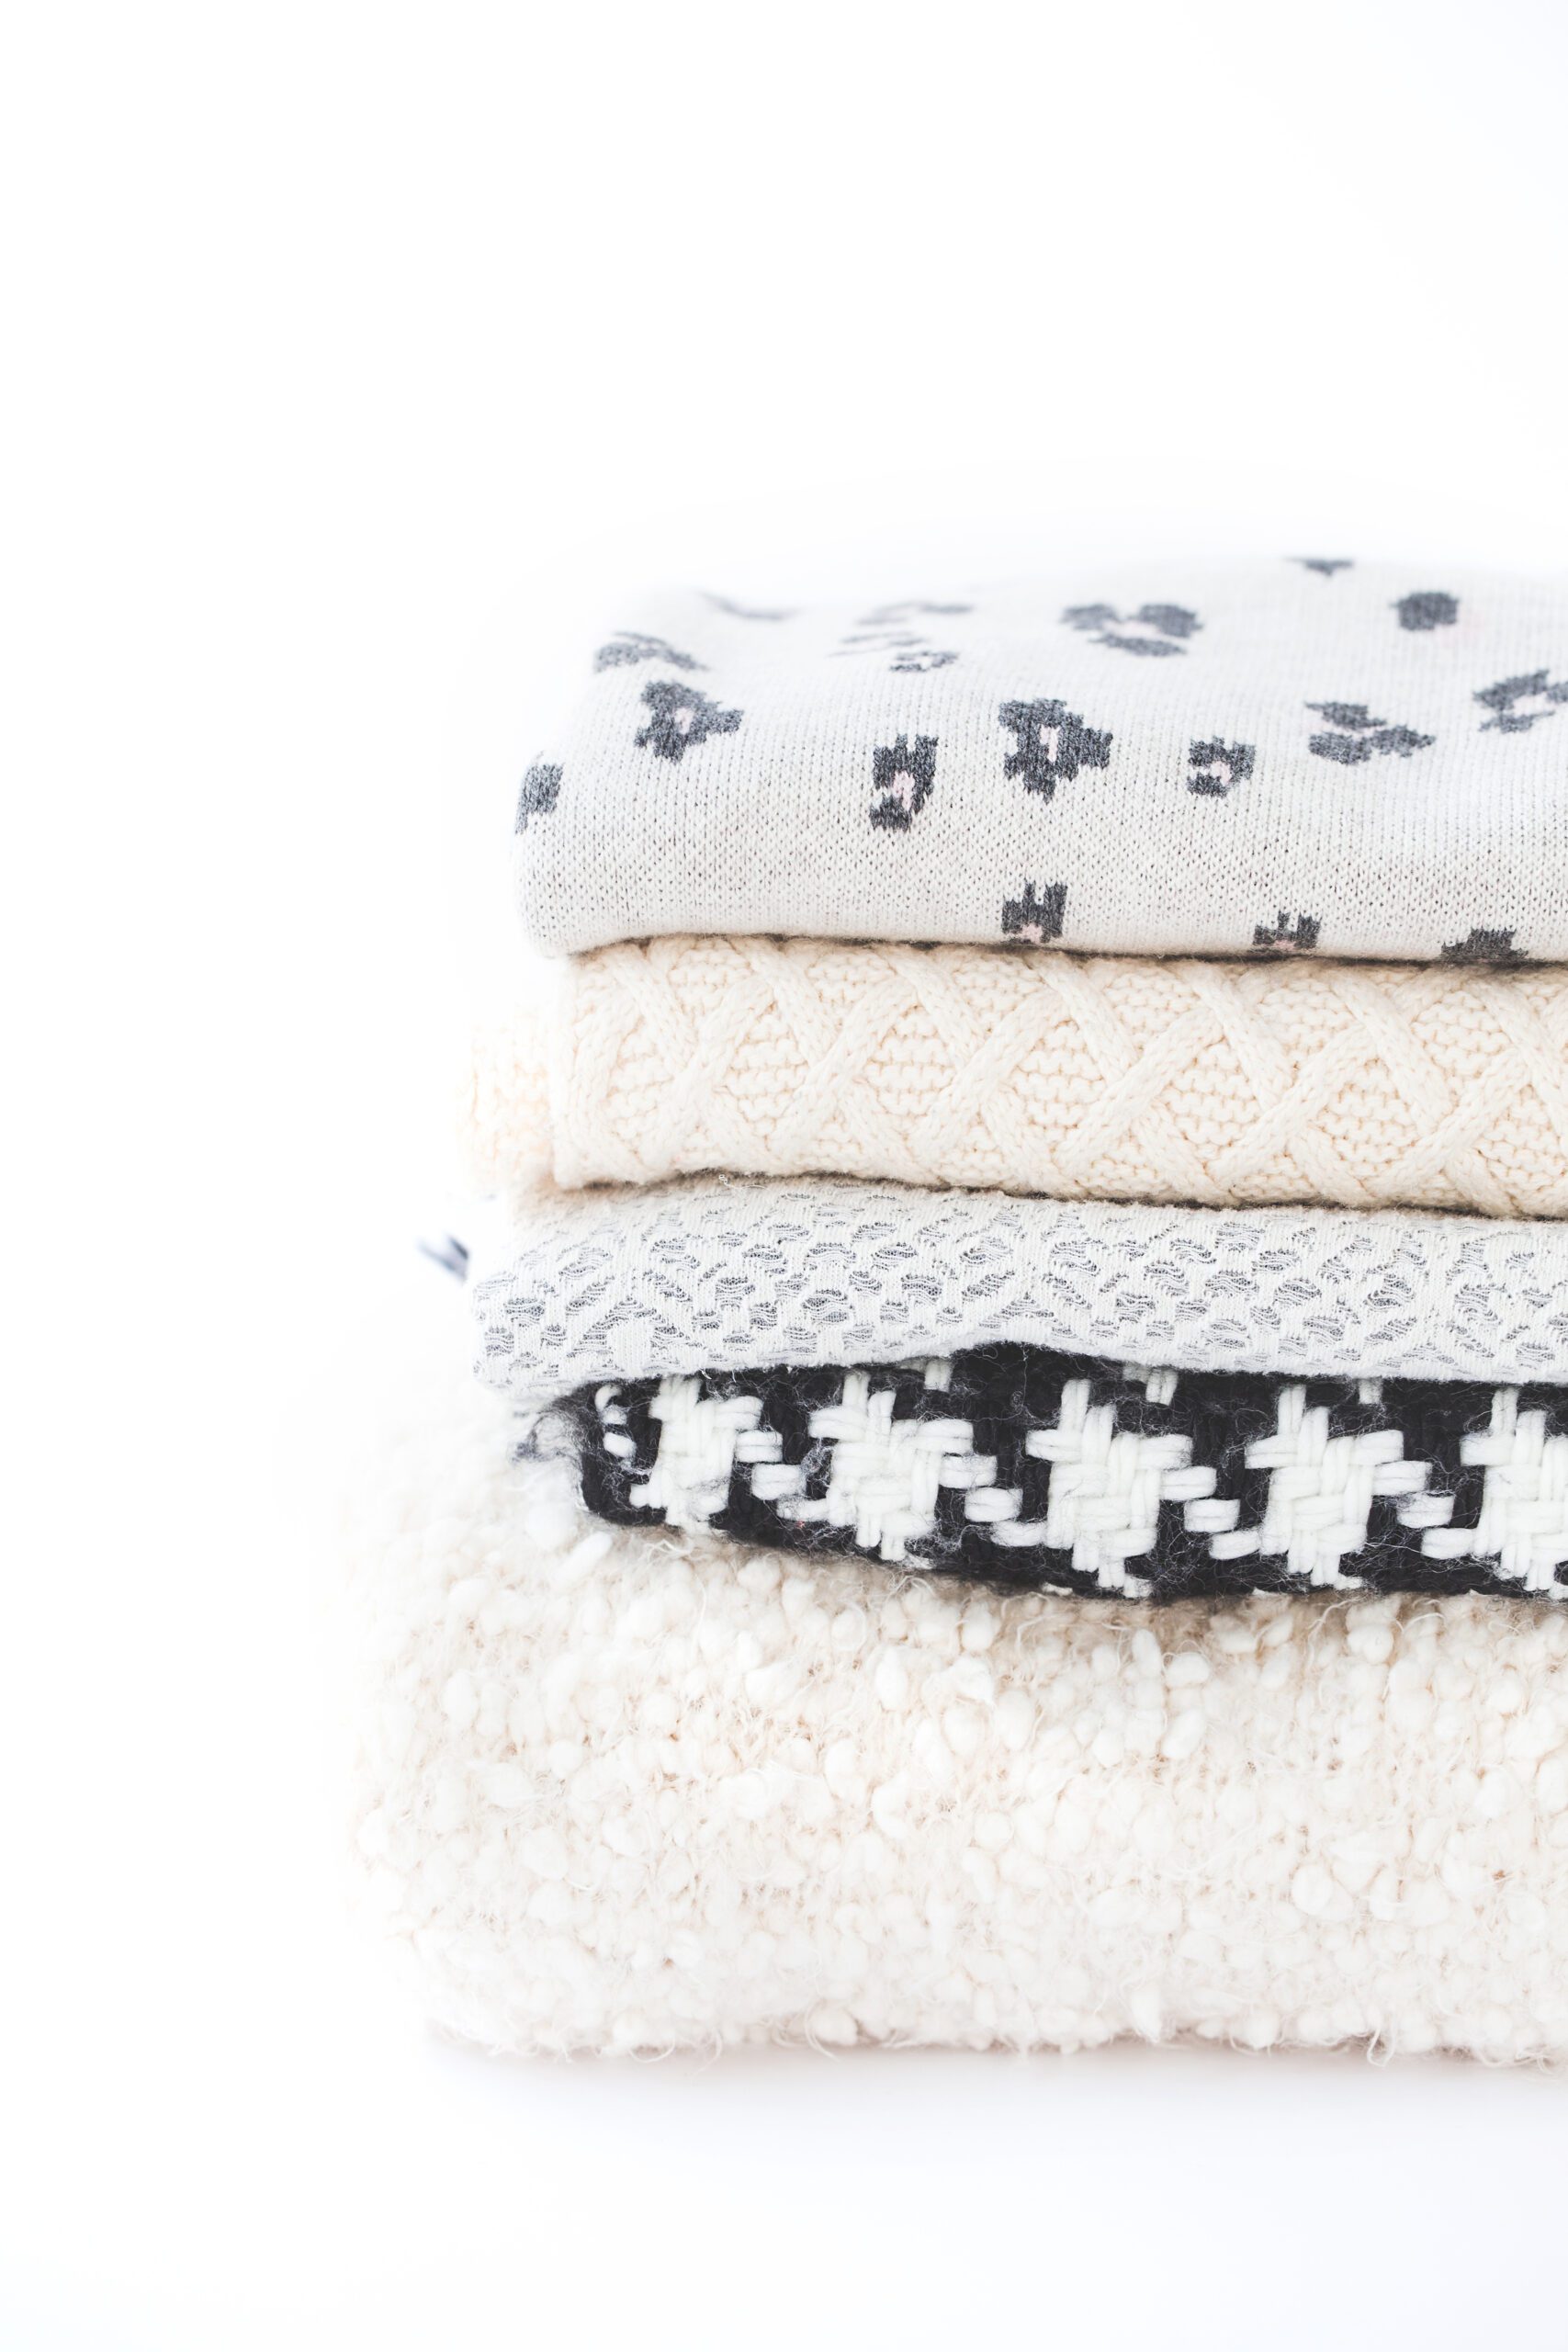 A pile of neatly folded jumpers and sweaters - Marie Kondo KonMari Method